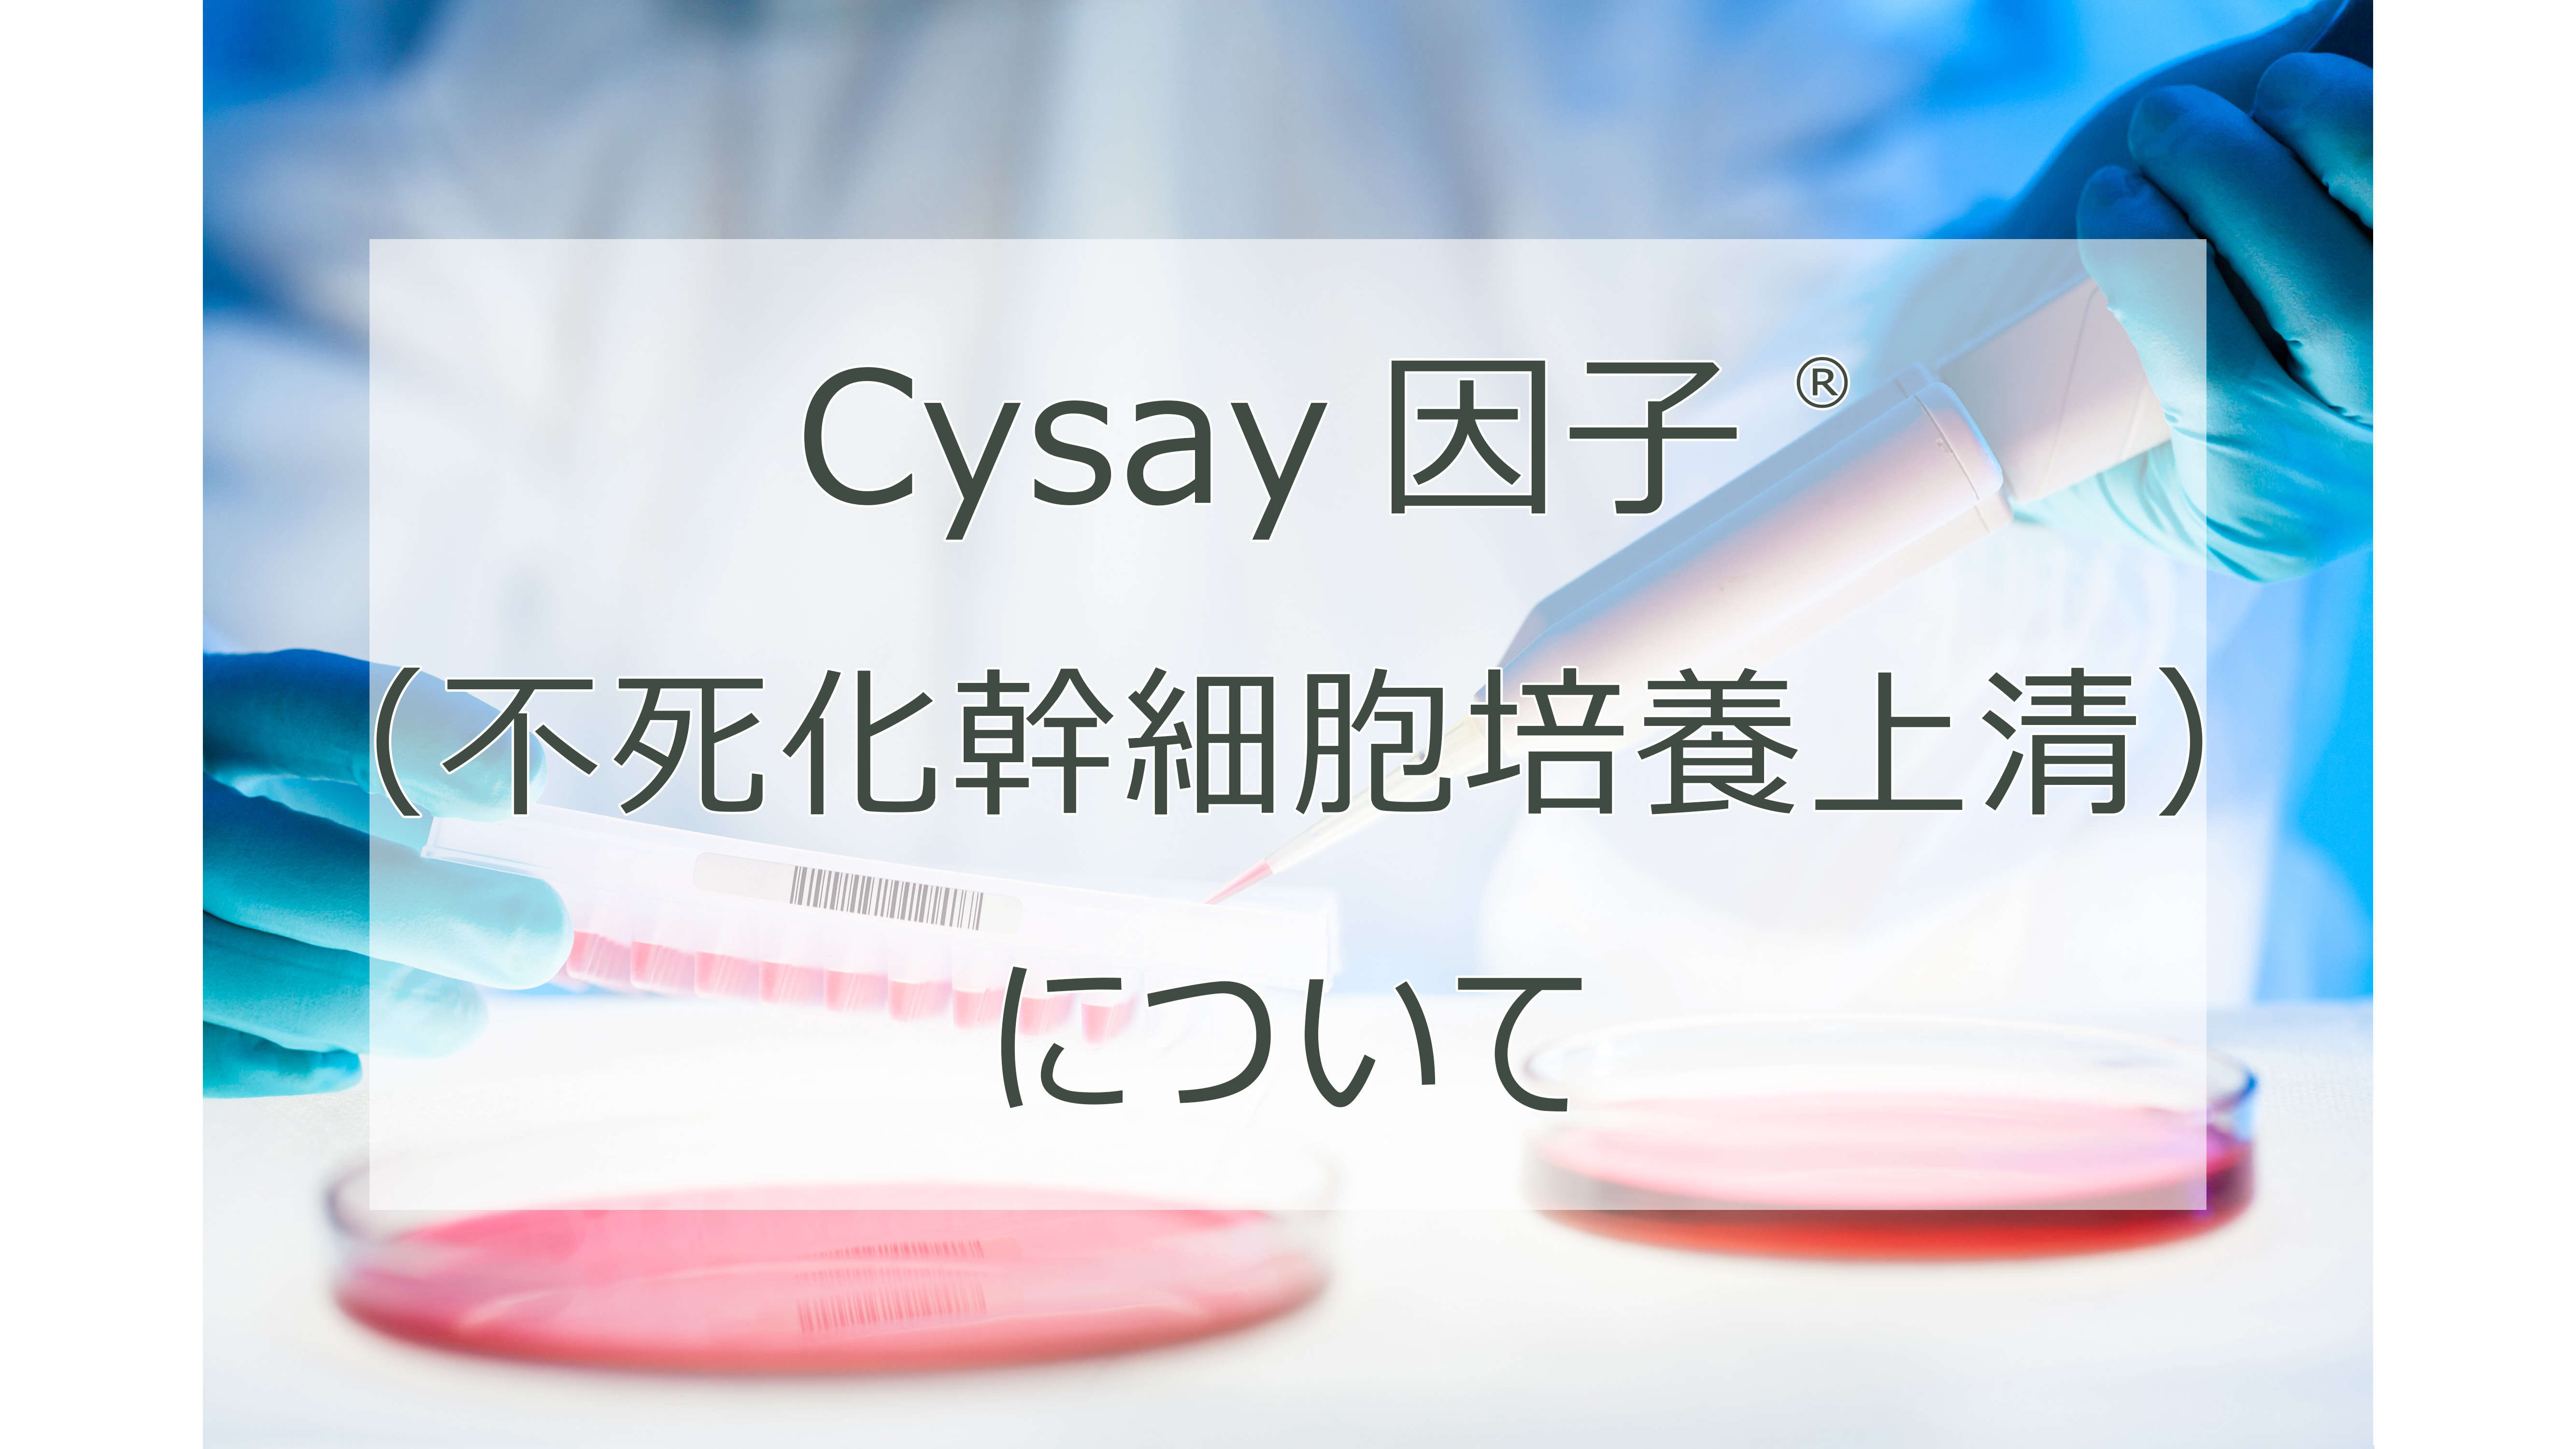 Cysay因子®について